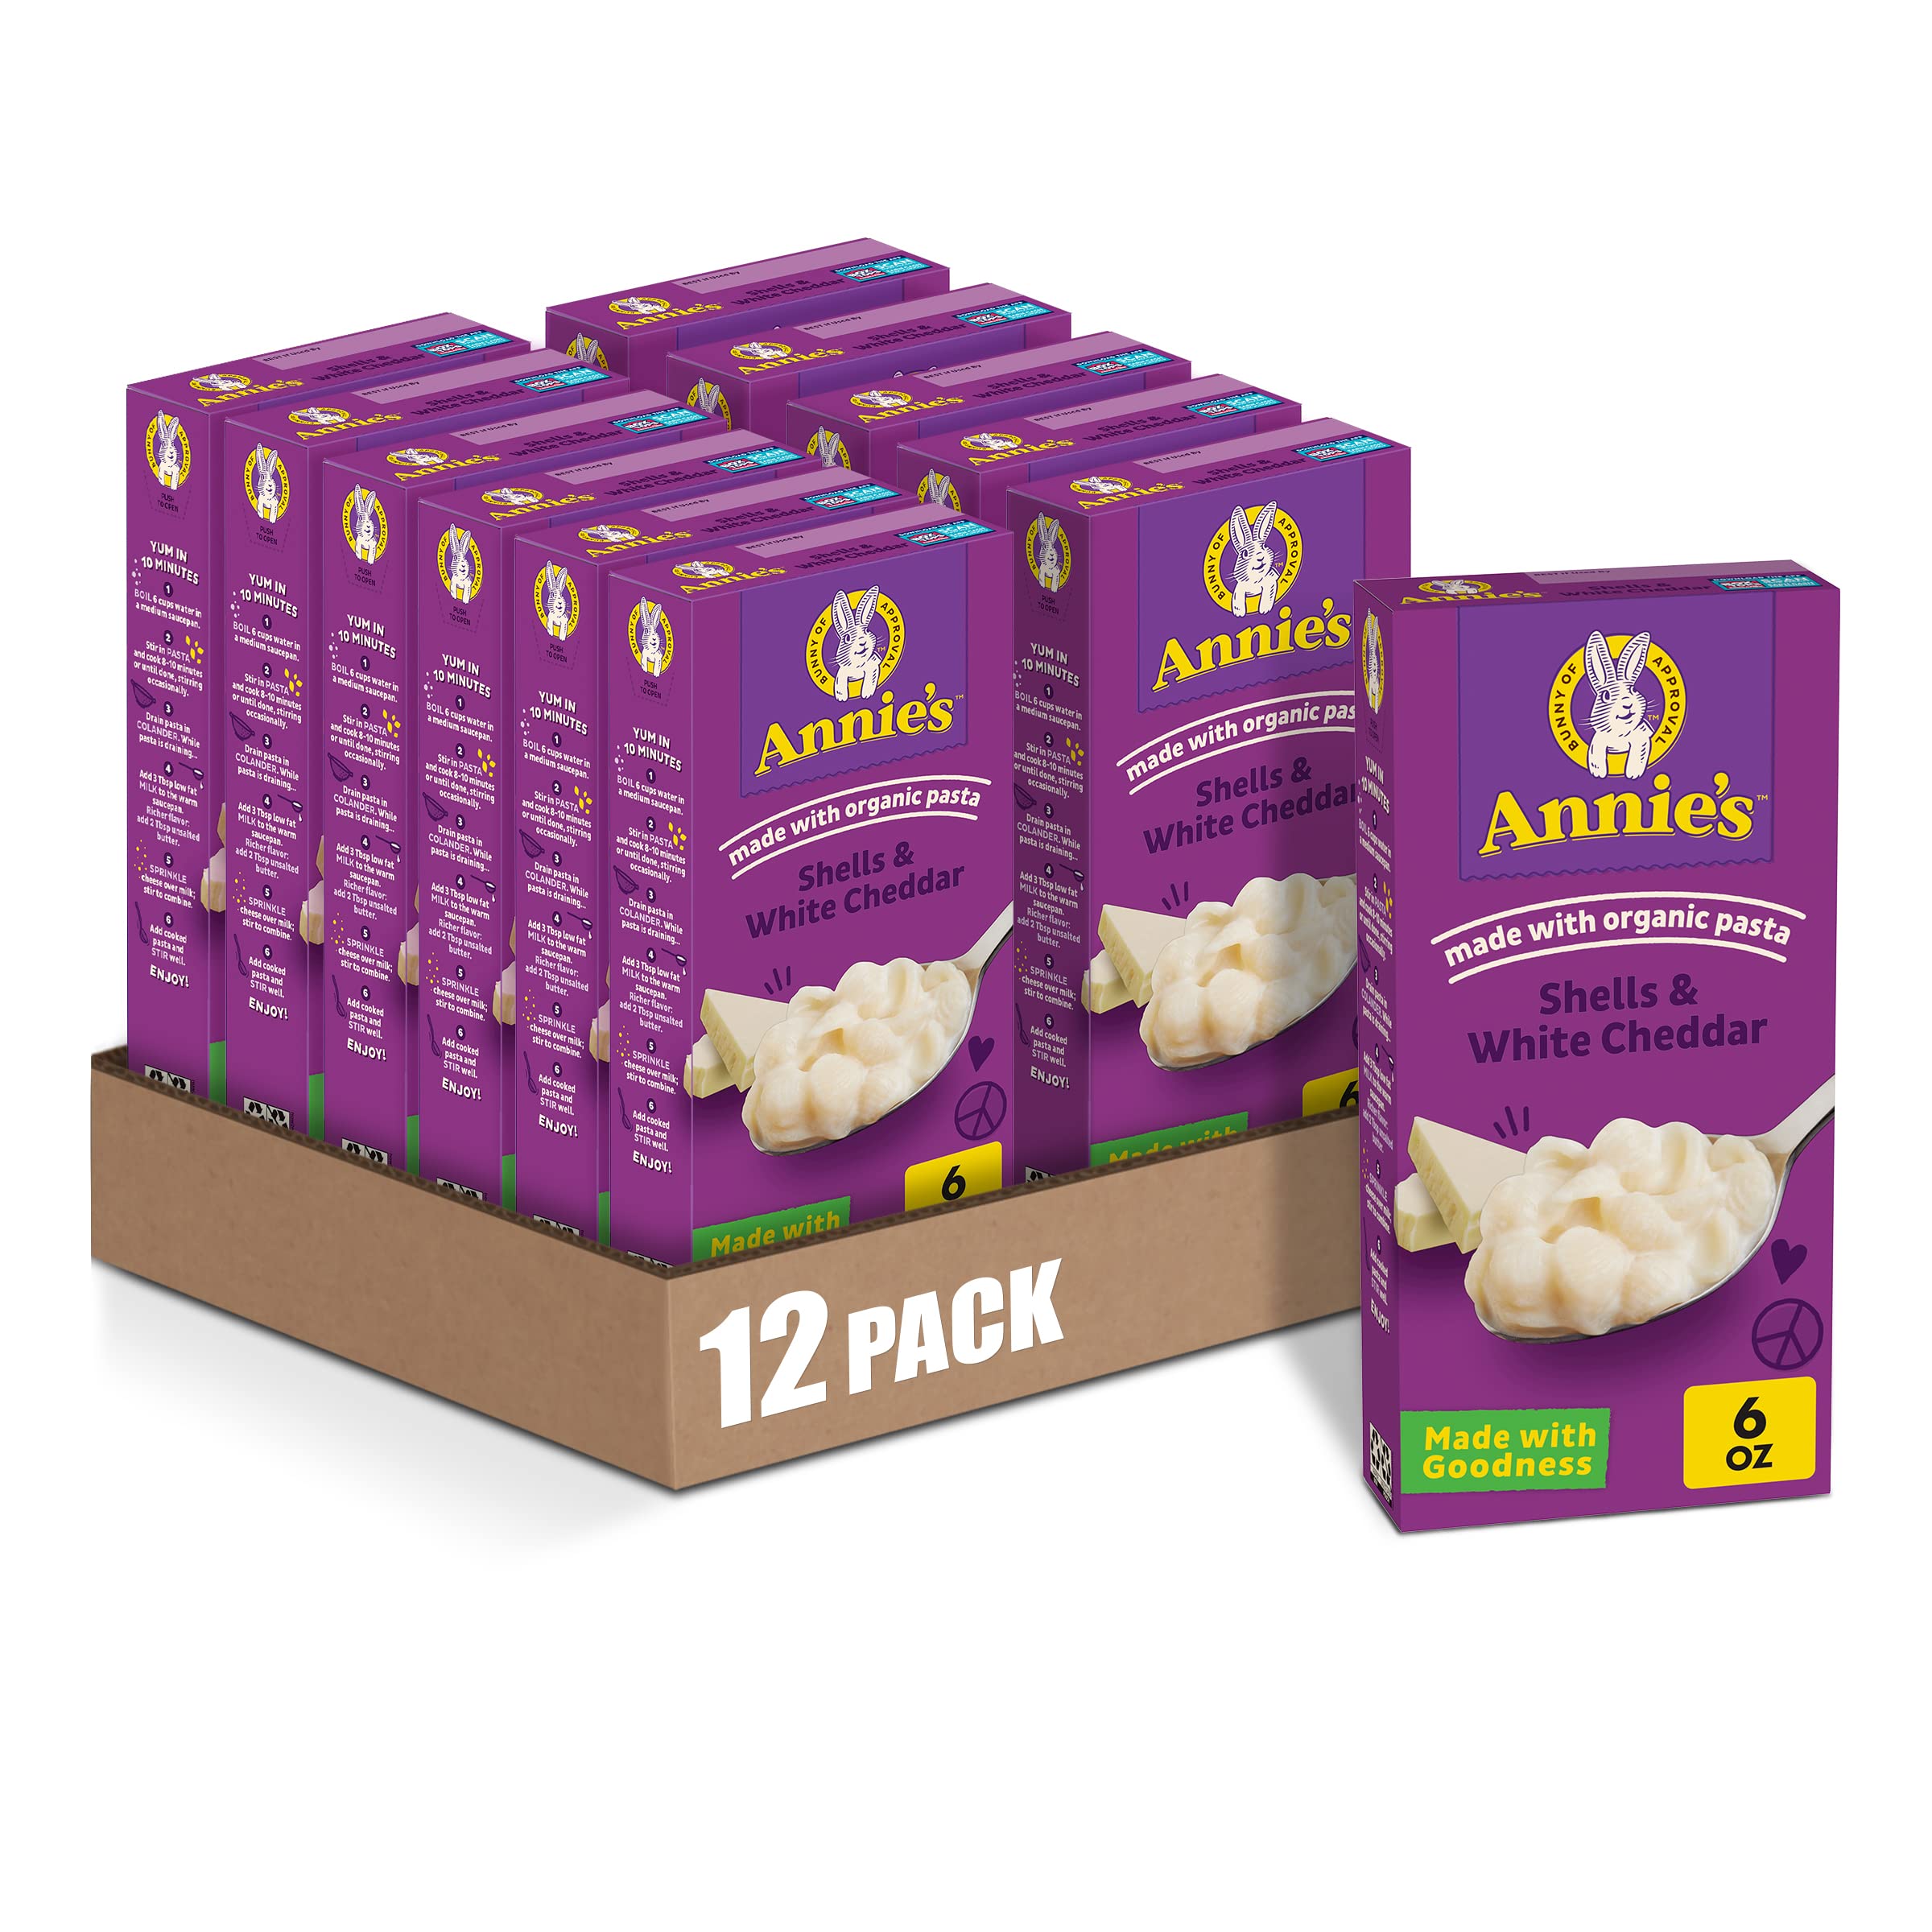 12-Pack 6-oz Annie's Homegrown White Cheddar Shells Mac & Cheese $12.96 w/ S&S